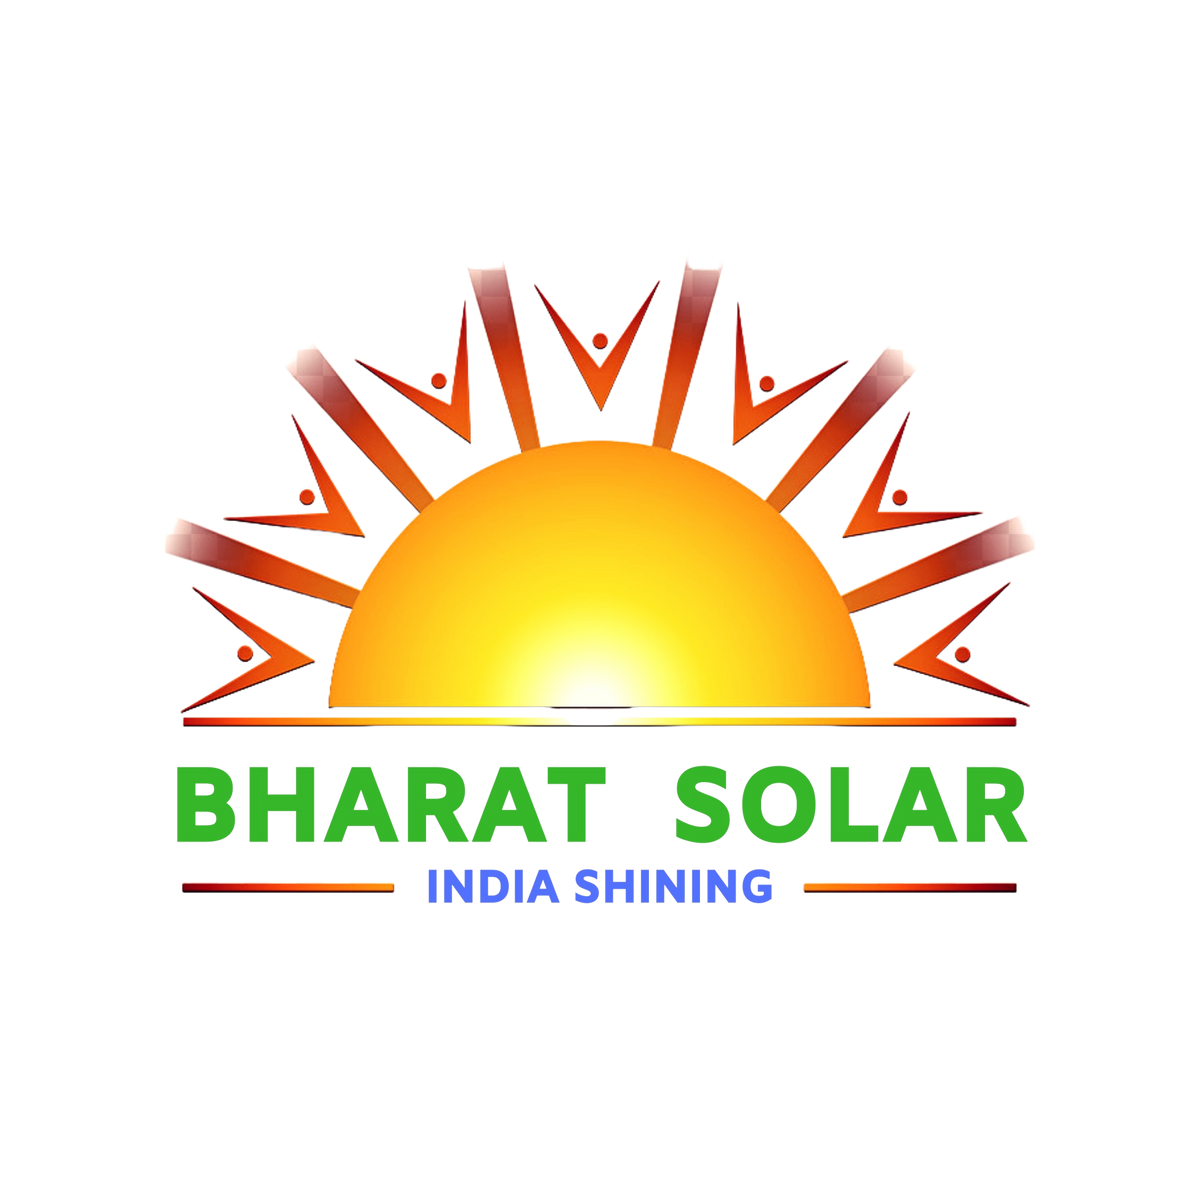 Bharat Solar Energy